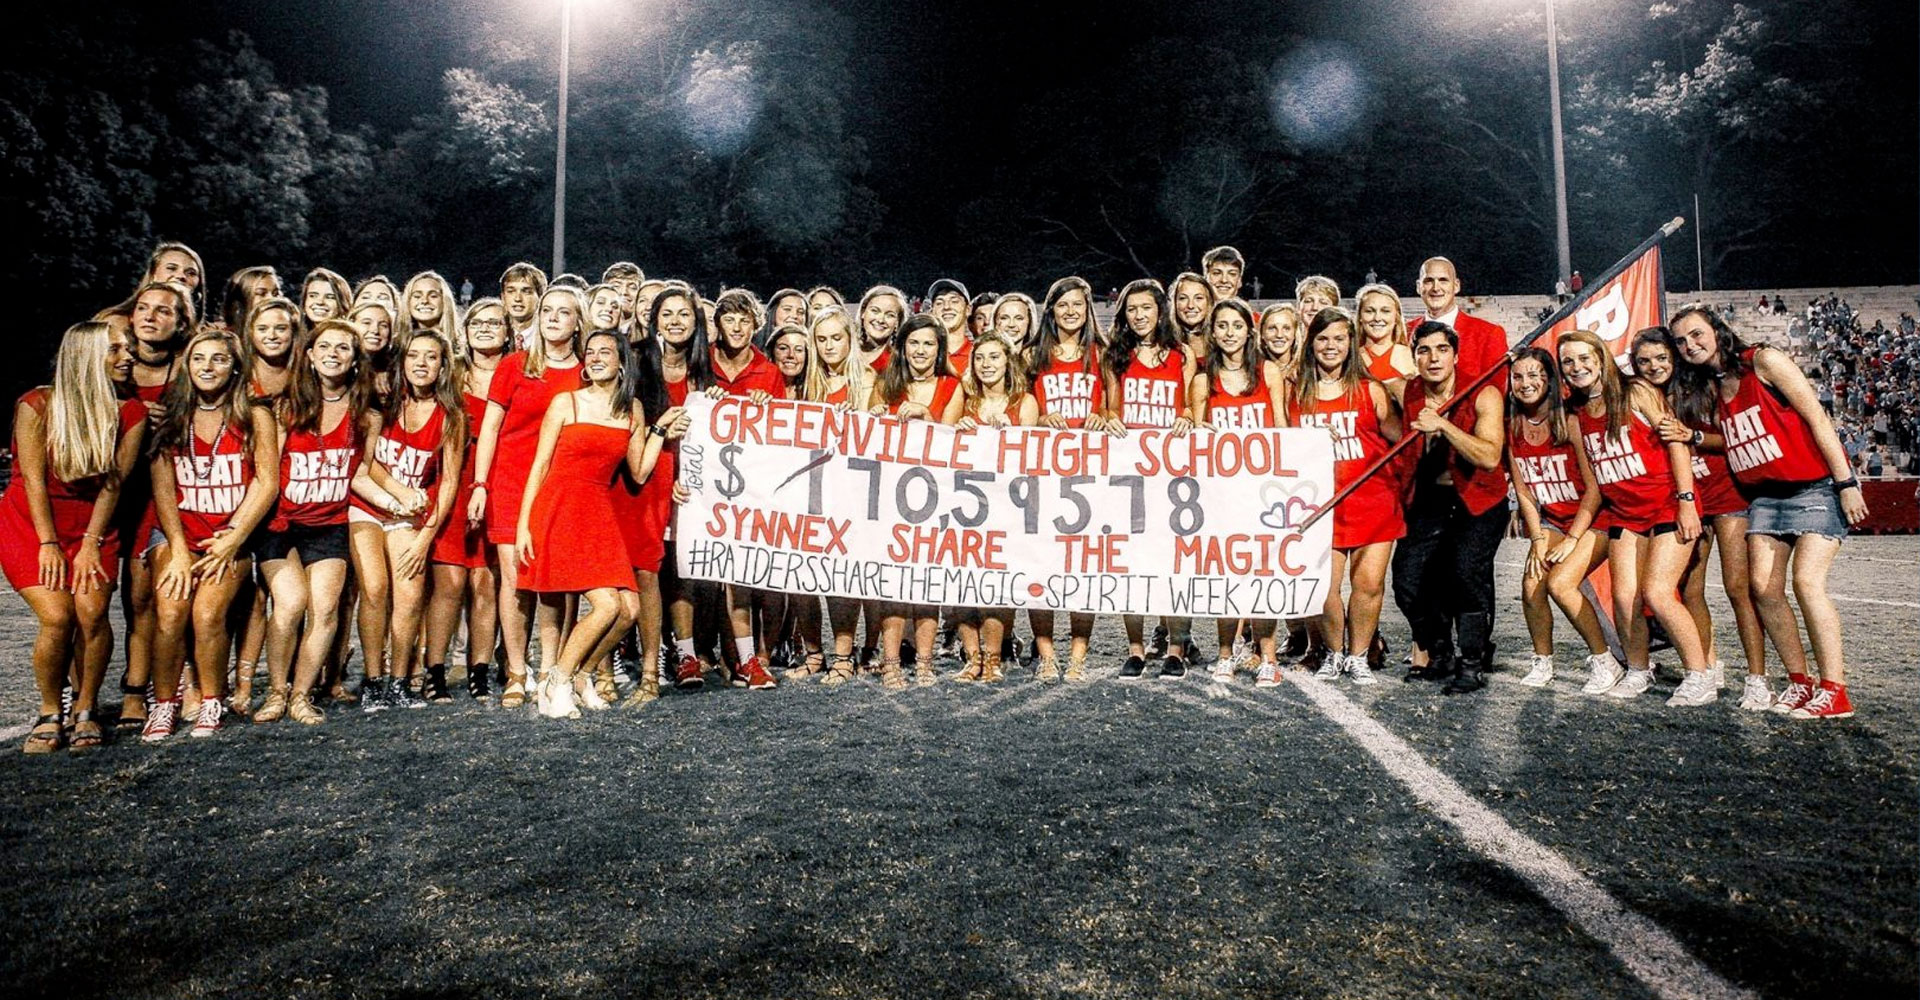 Greenville High School Raises More Than $170K for TD SYNNEX Share the Magic